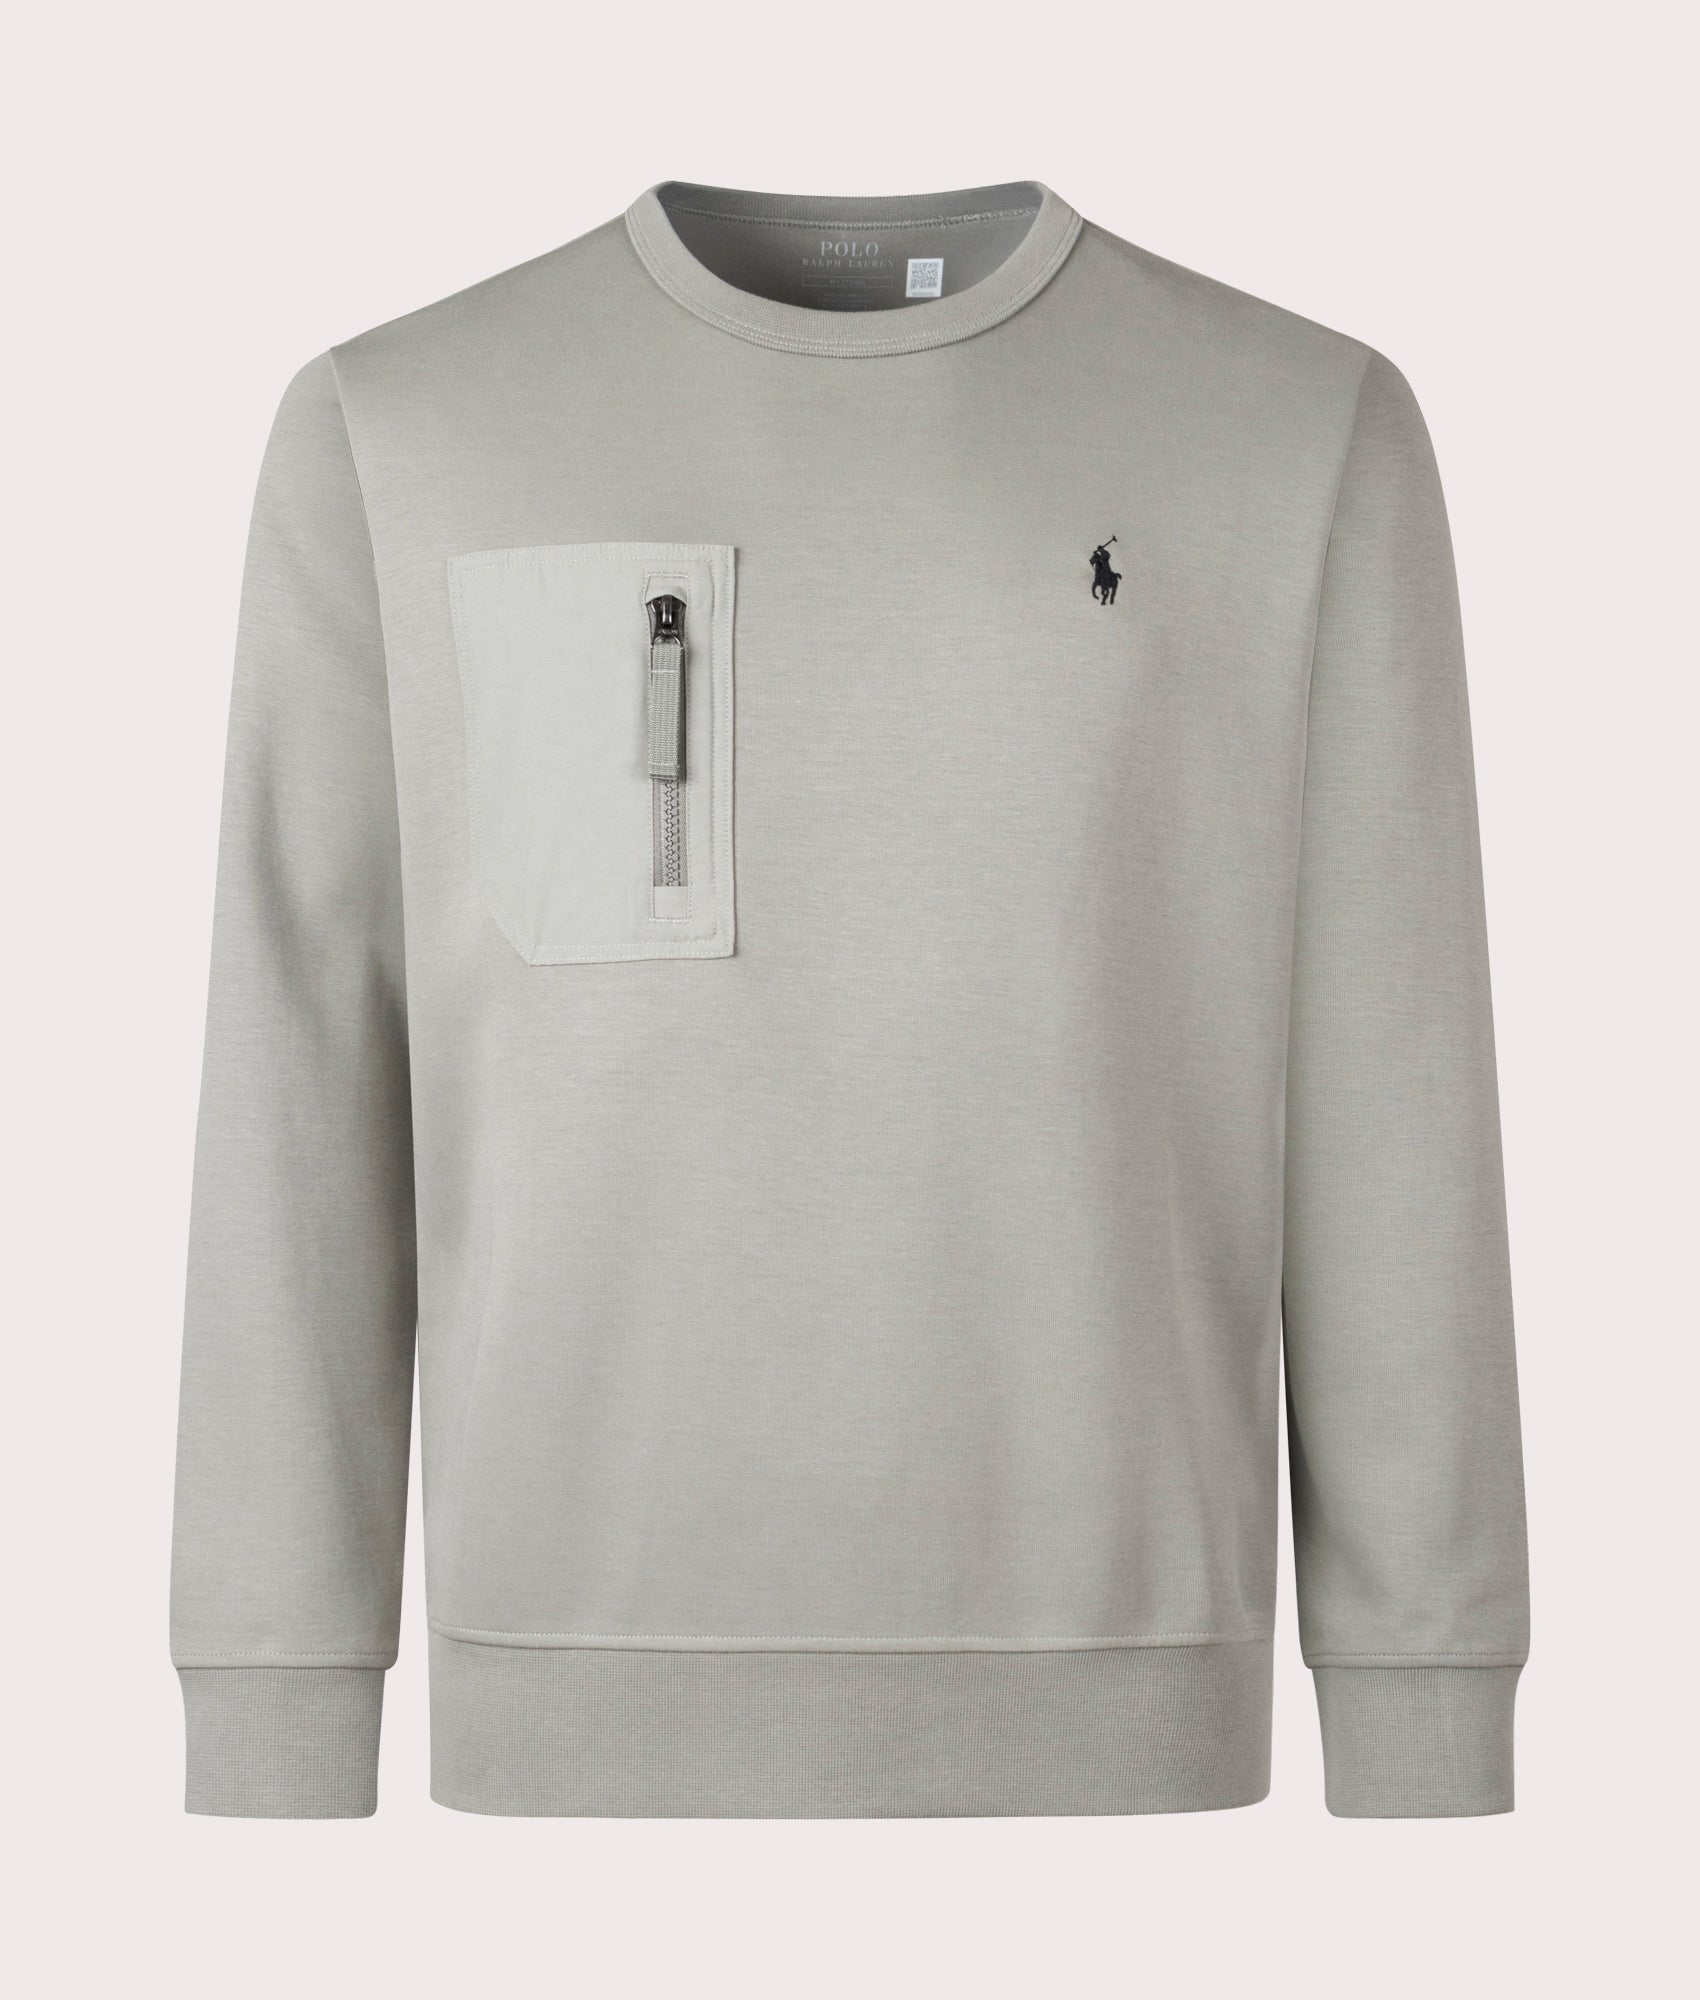 Polo Ralph Lauren Mens Pocket Zip Sweatshirt - Colour: 001 Performance Grey - Size: Large